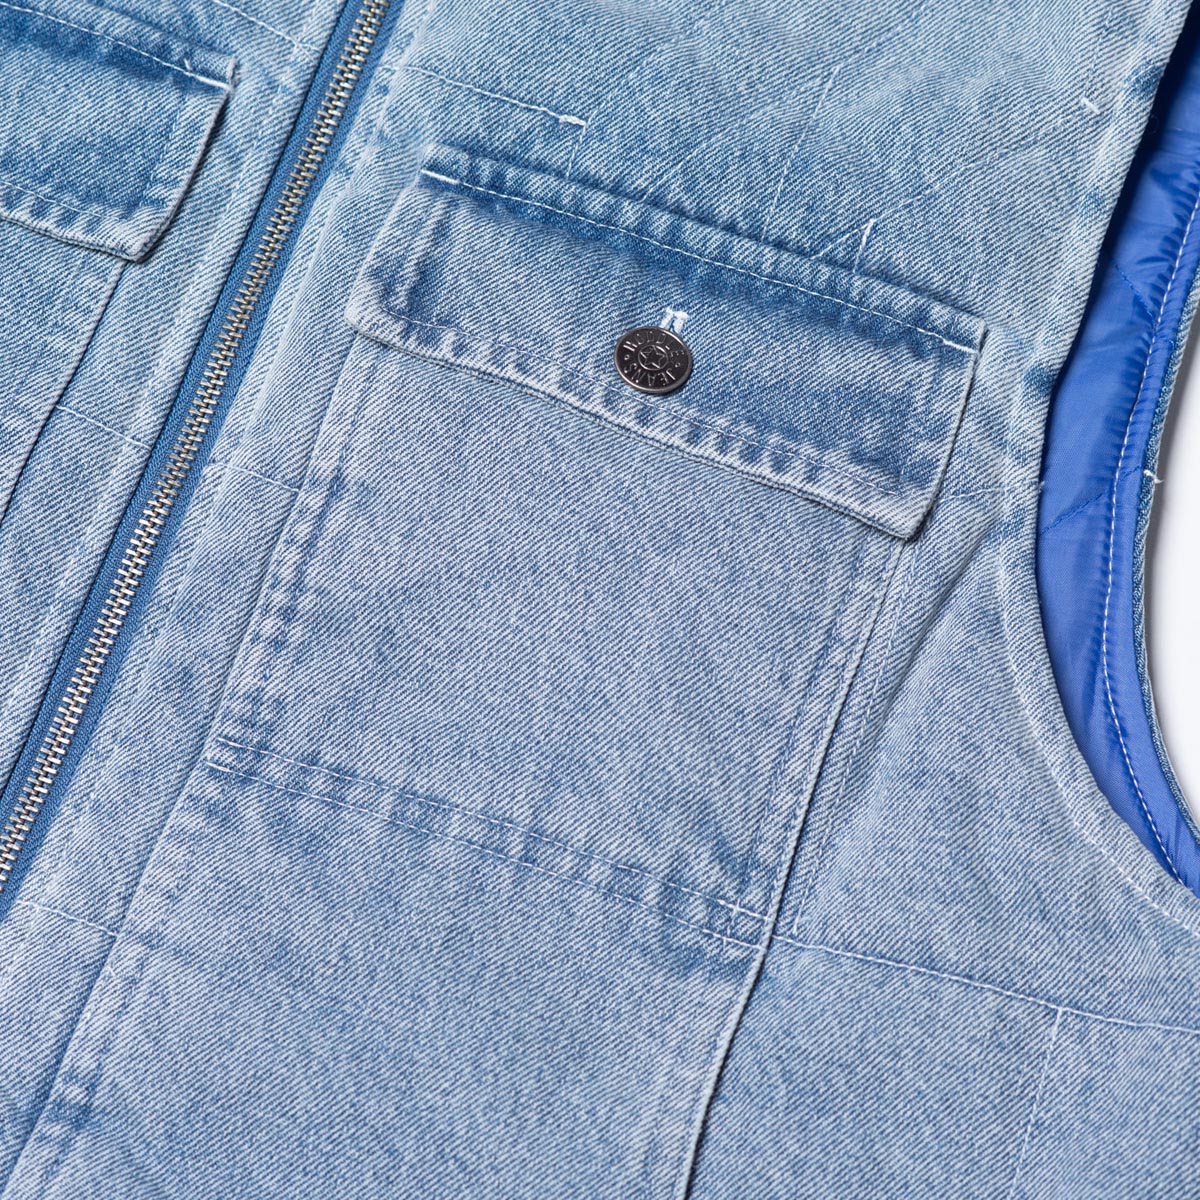 Hoddle Zip Up Carpenter Vest Jacket - Blue Denim Wash image 4